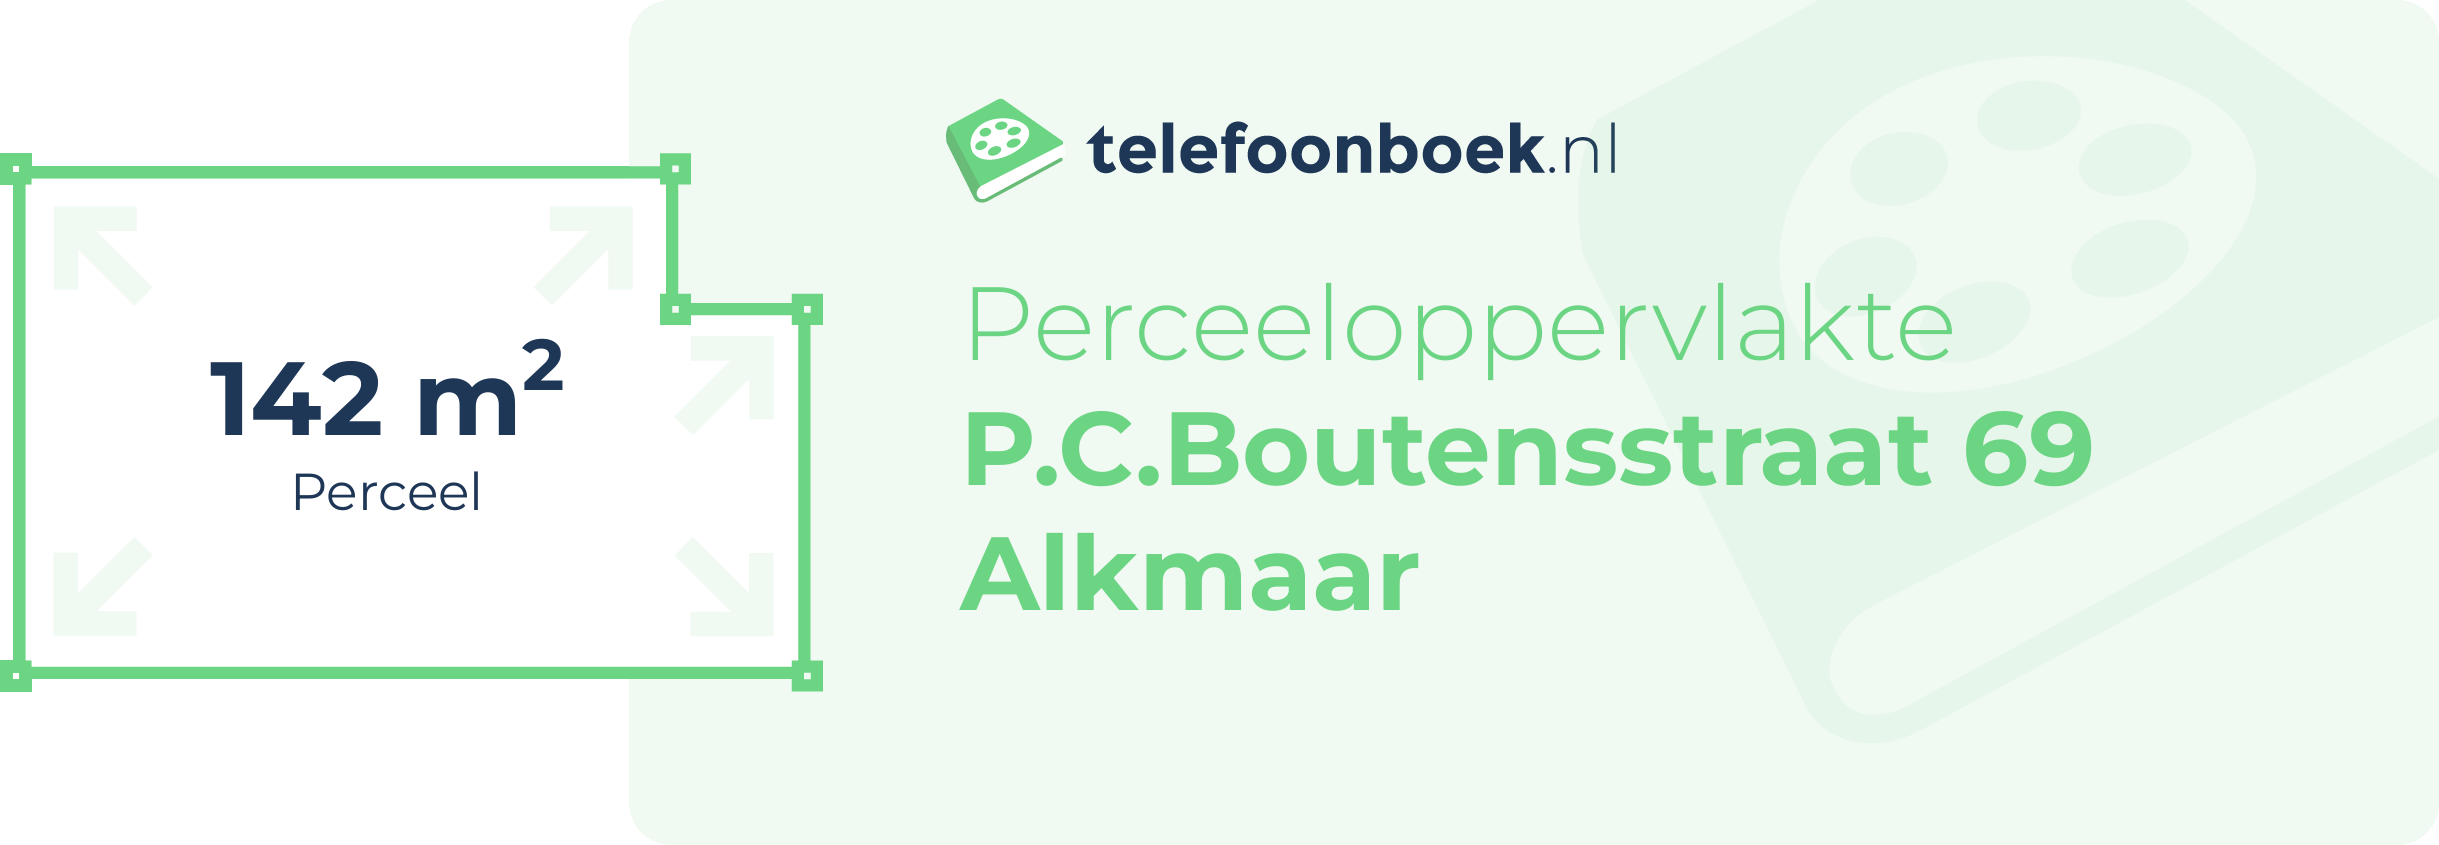 Perceeloppervlakte P.C.Boutensstraat 69 Alkmaar